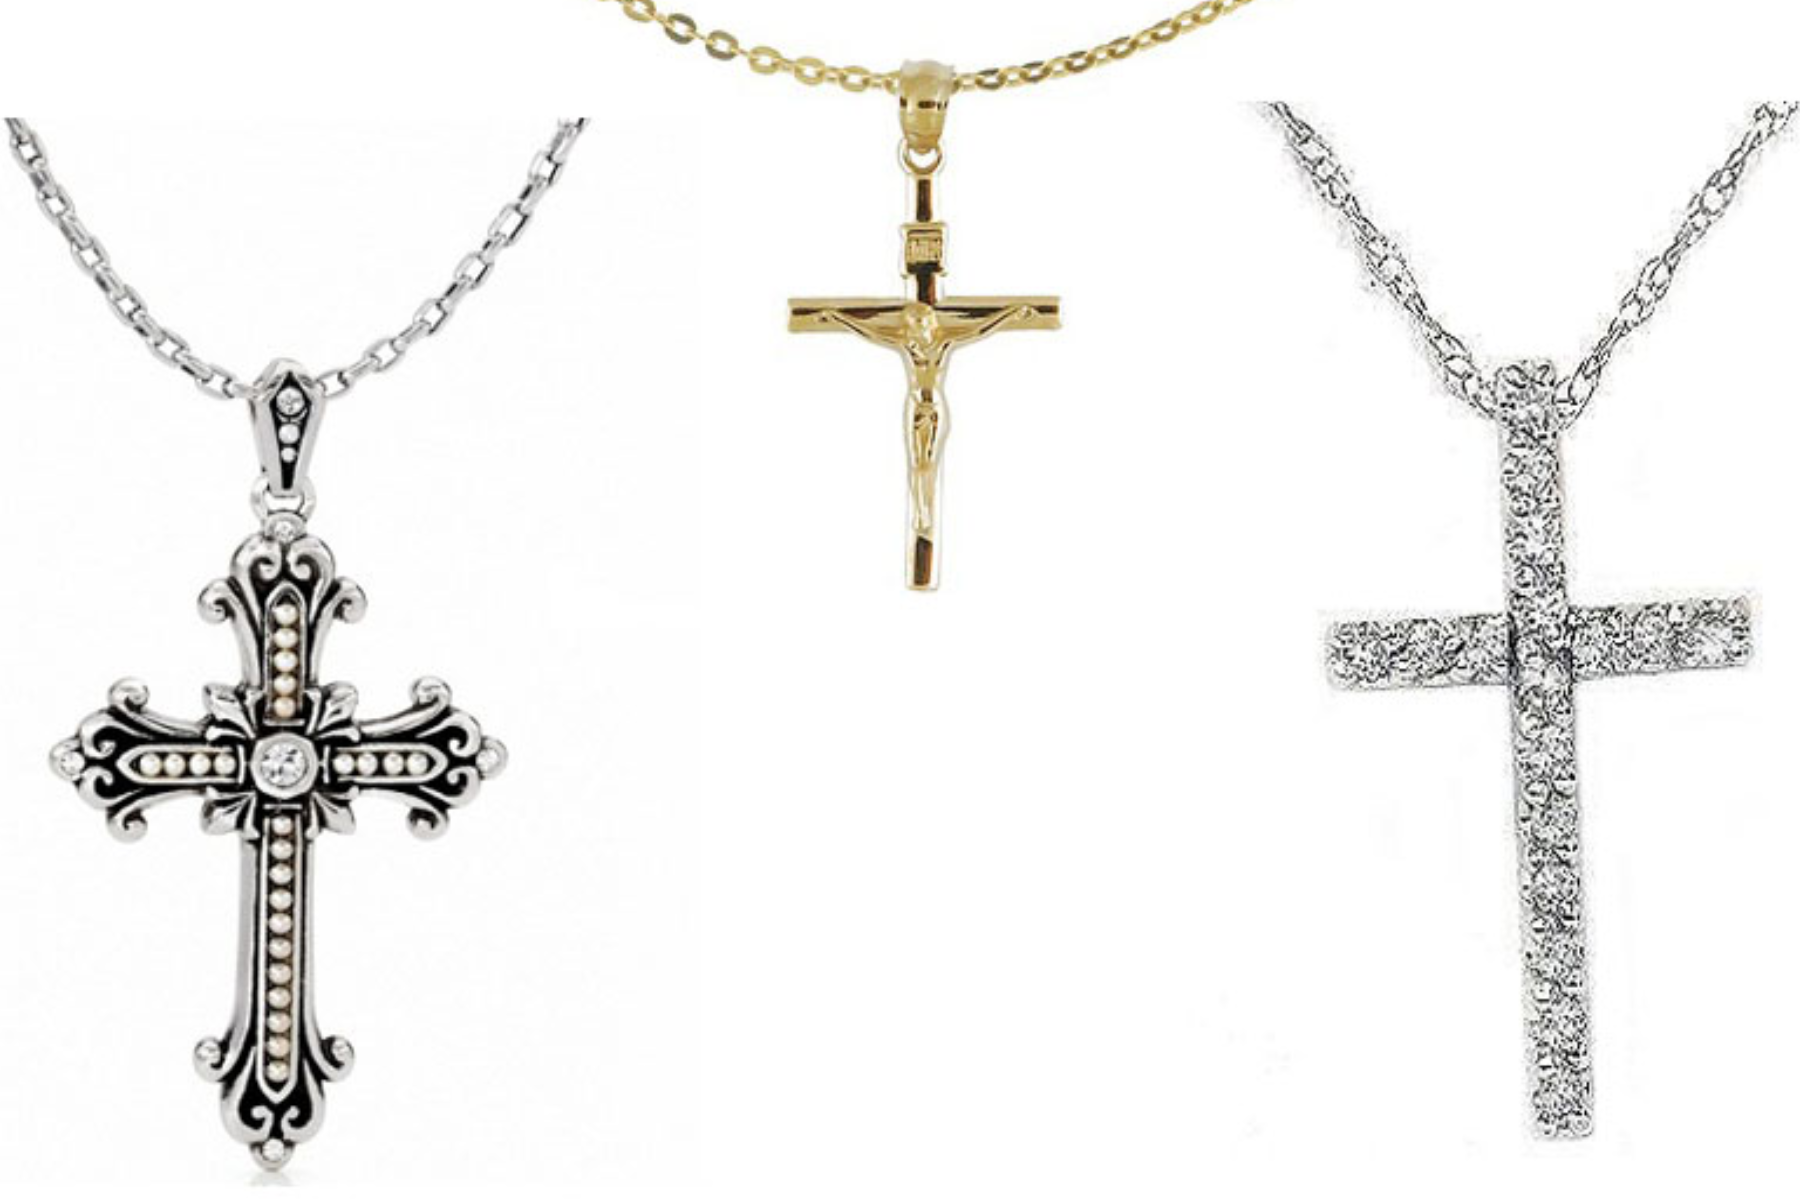 Three distinct varieties of cross pendant necklaces